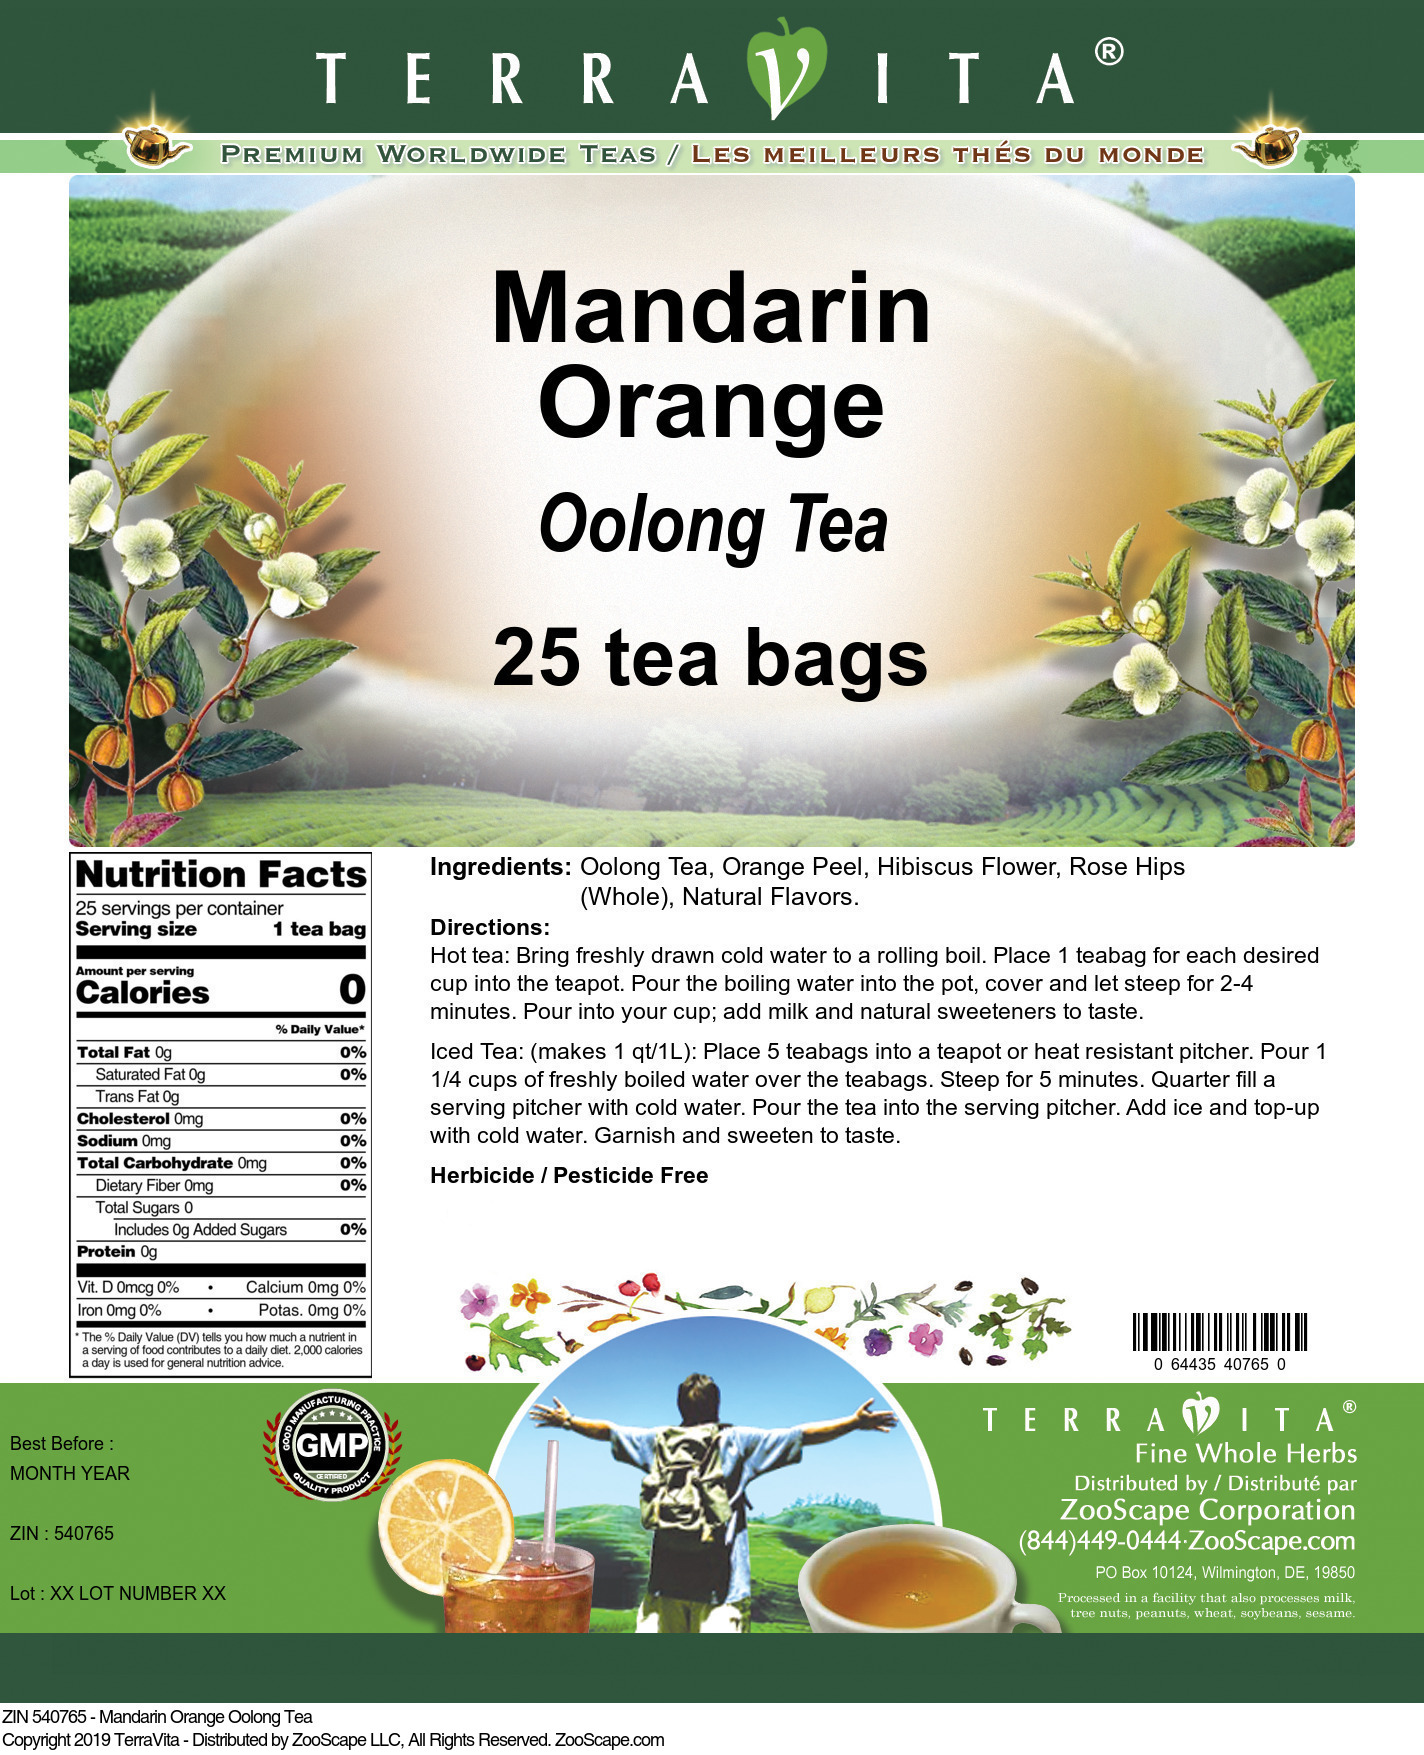 Mandarin Orange Oolong Tea - Label